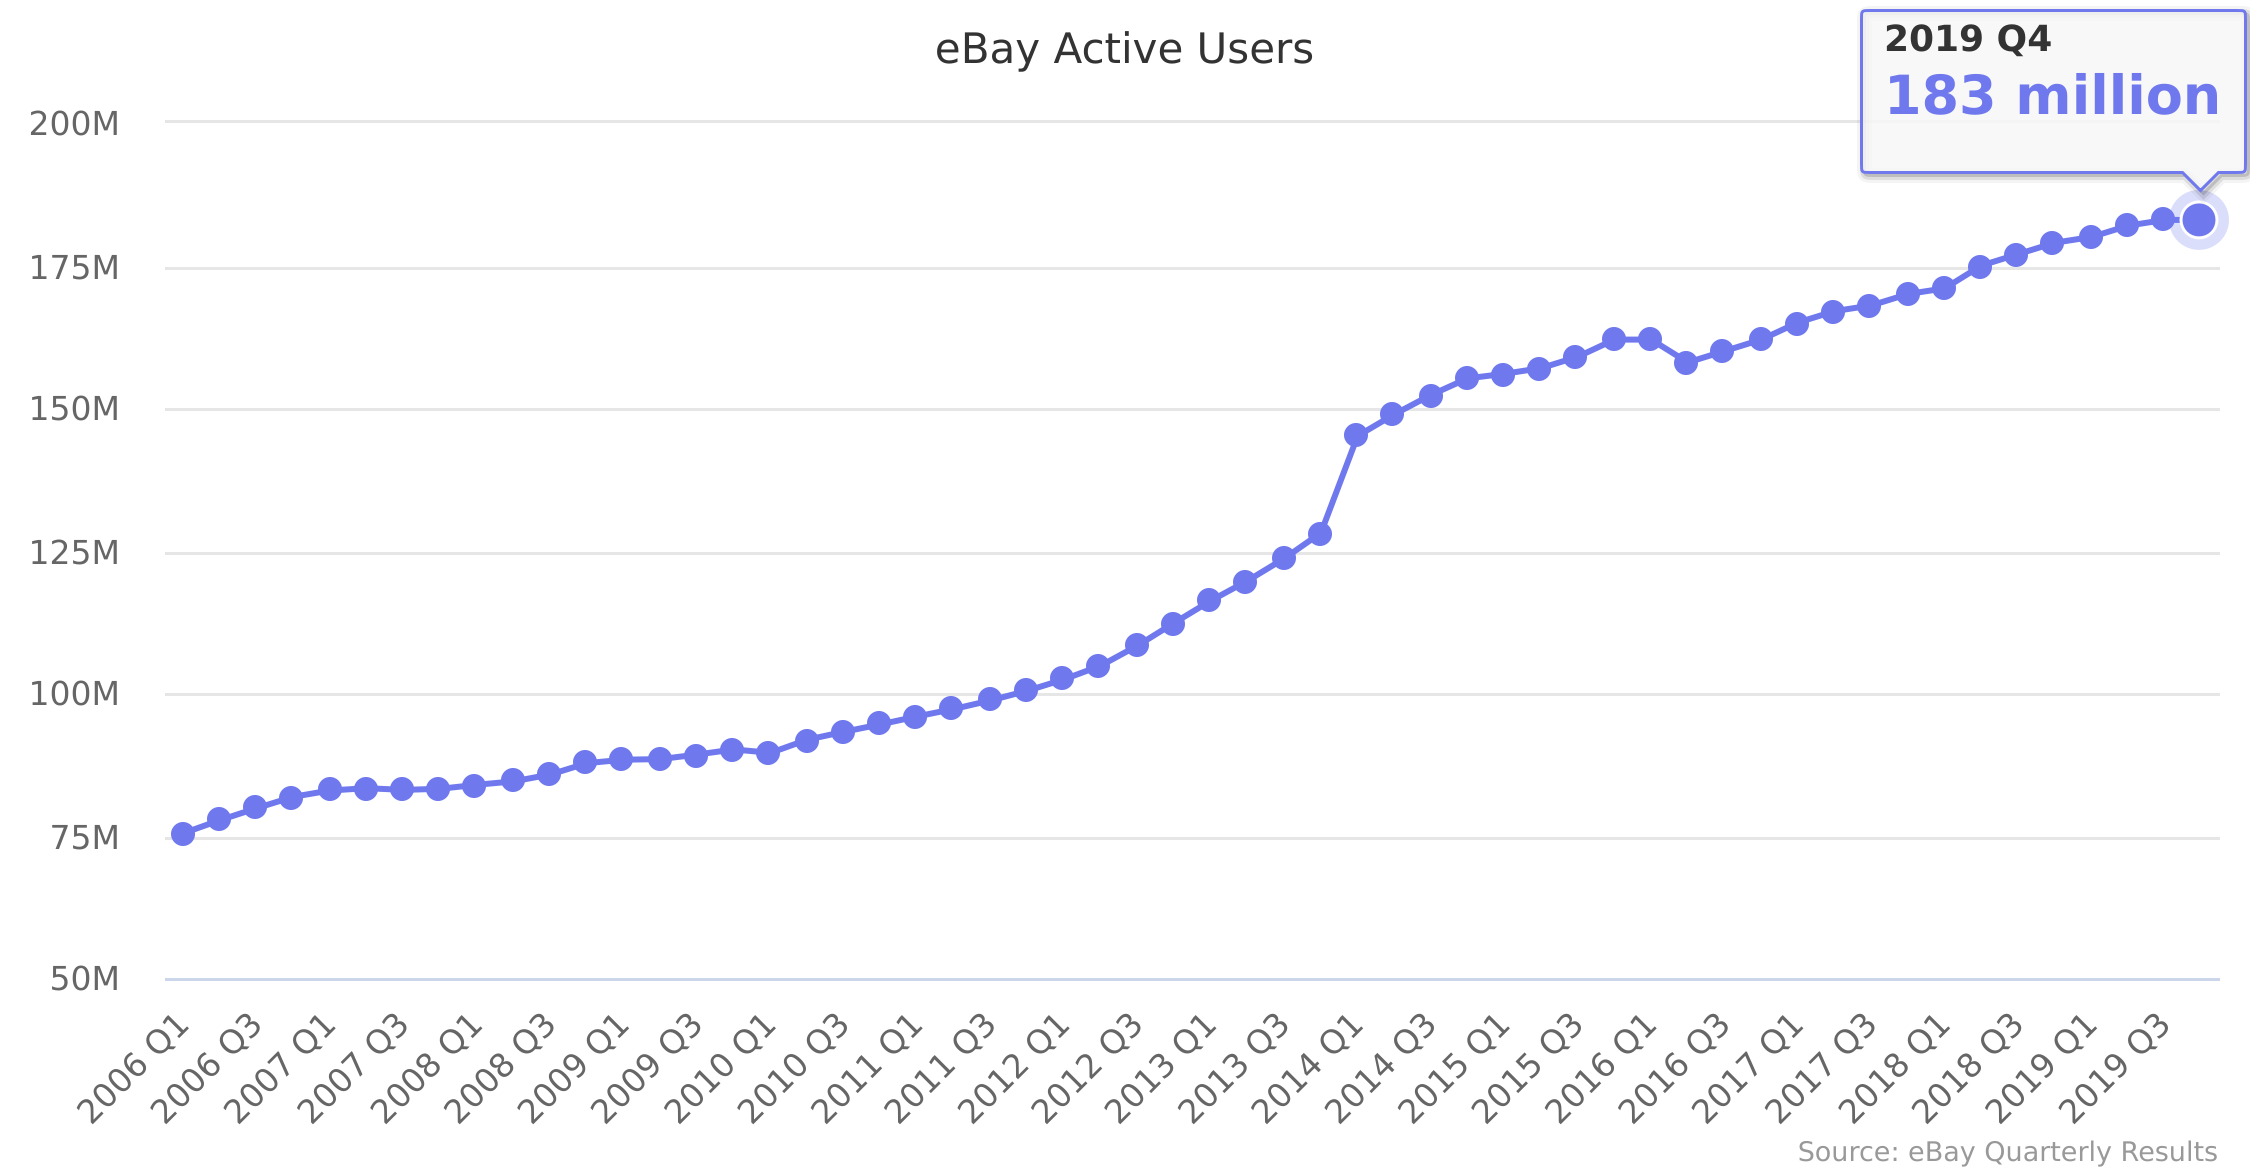 eBay Active Users 2006-2019